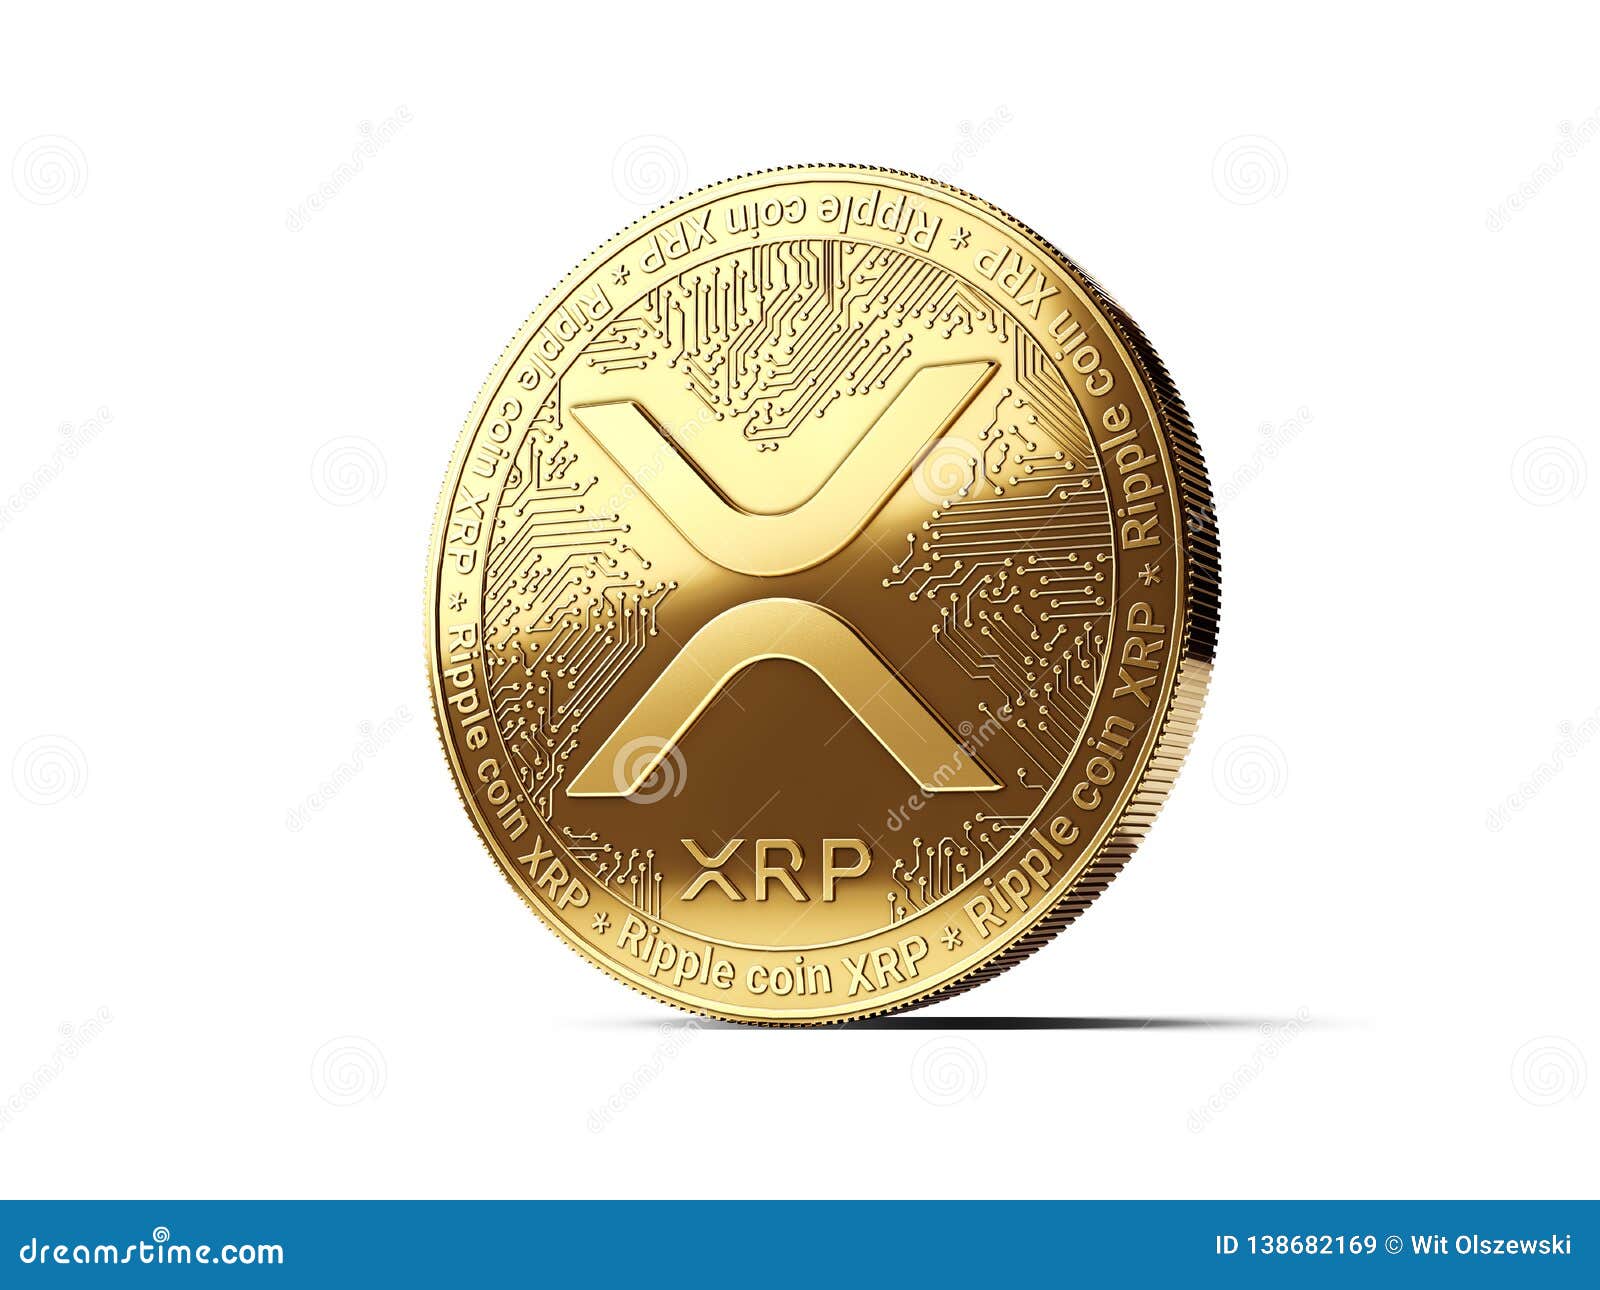 Продажа нот коинов. XRP криптовалюта монета. Криптовалюта монета Ripple. XRP криптовалюта лого. Монетка XRP.